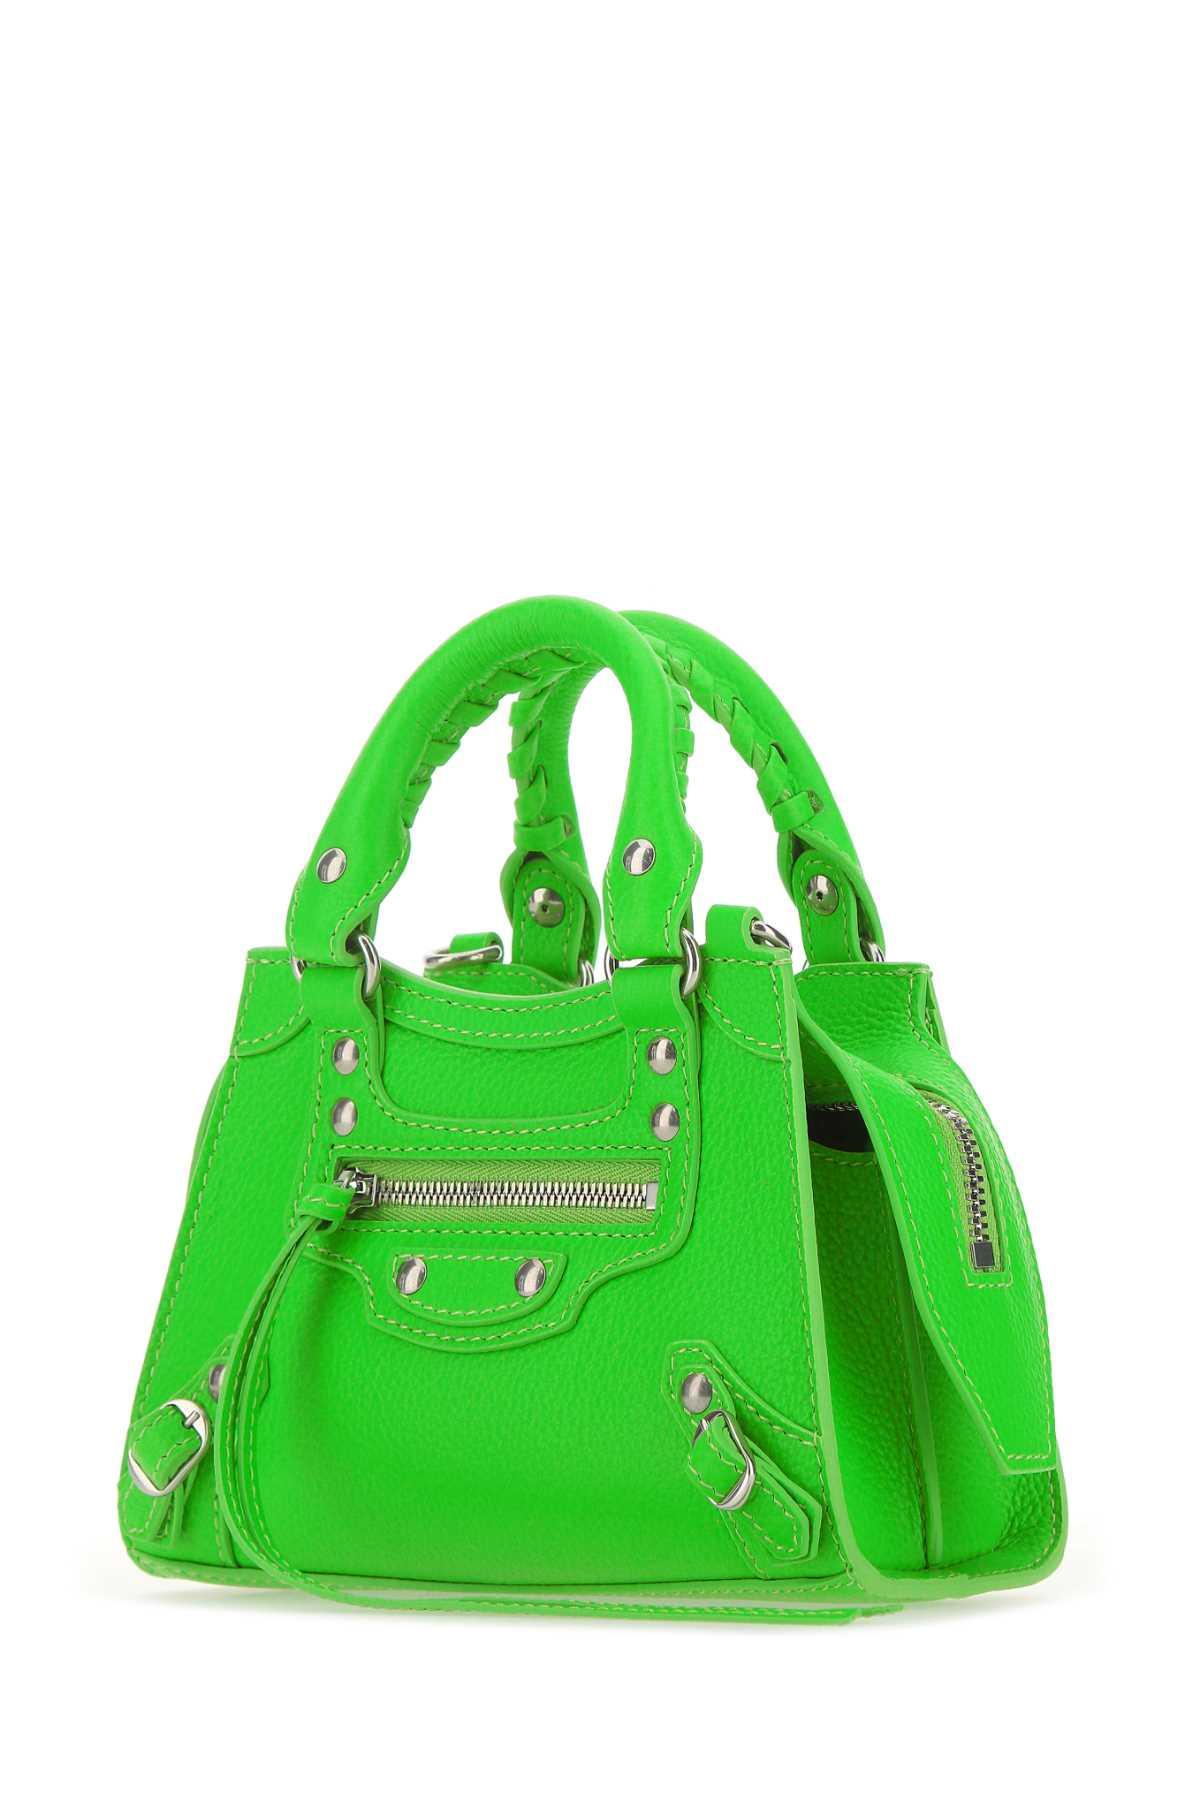 Balenciaga Leather Neo Classic City Nano Top Handle Bag in Green 